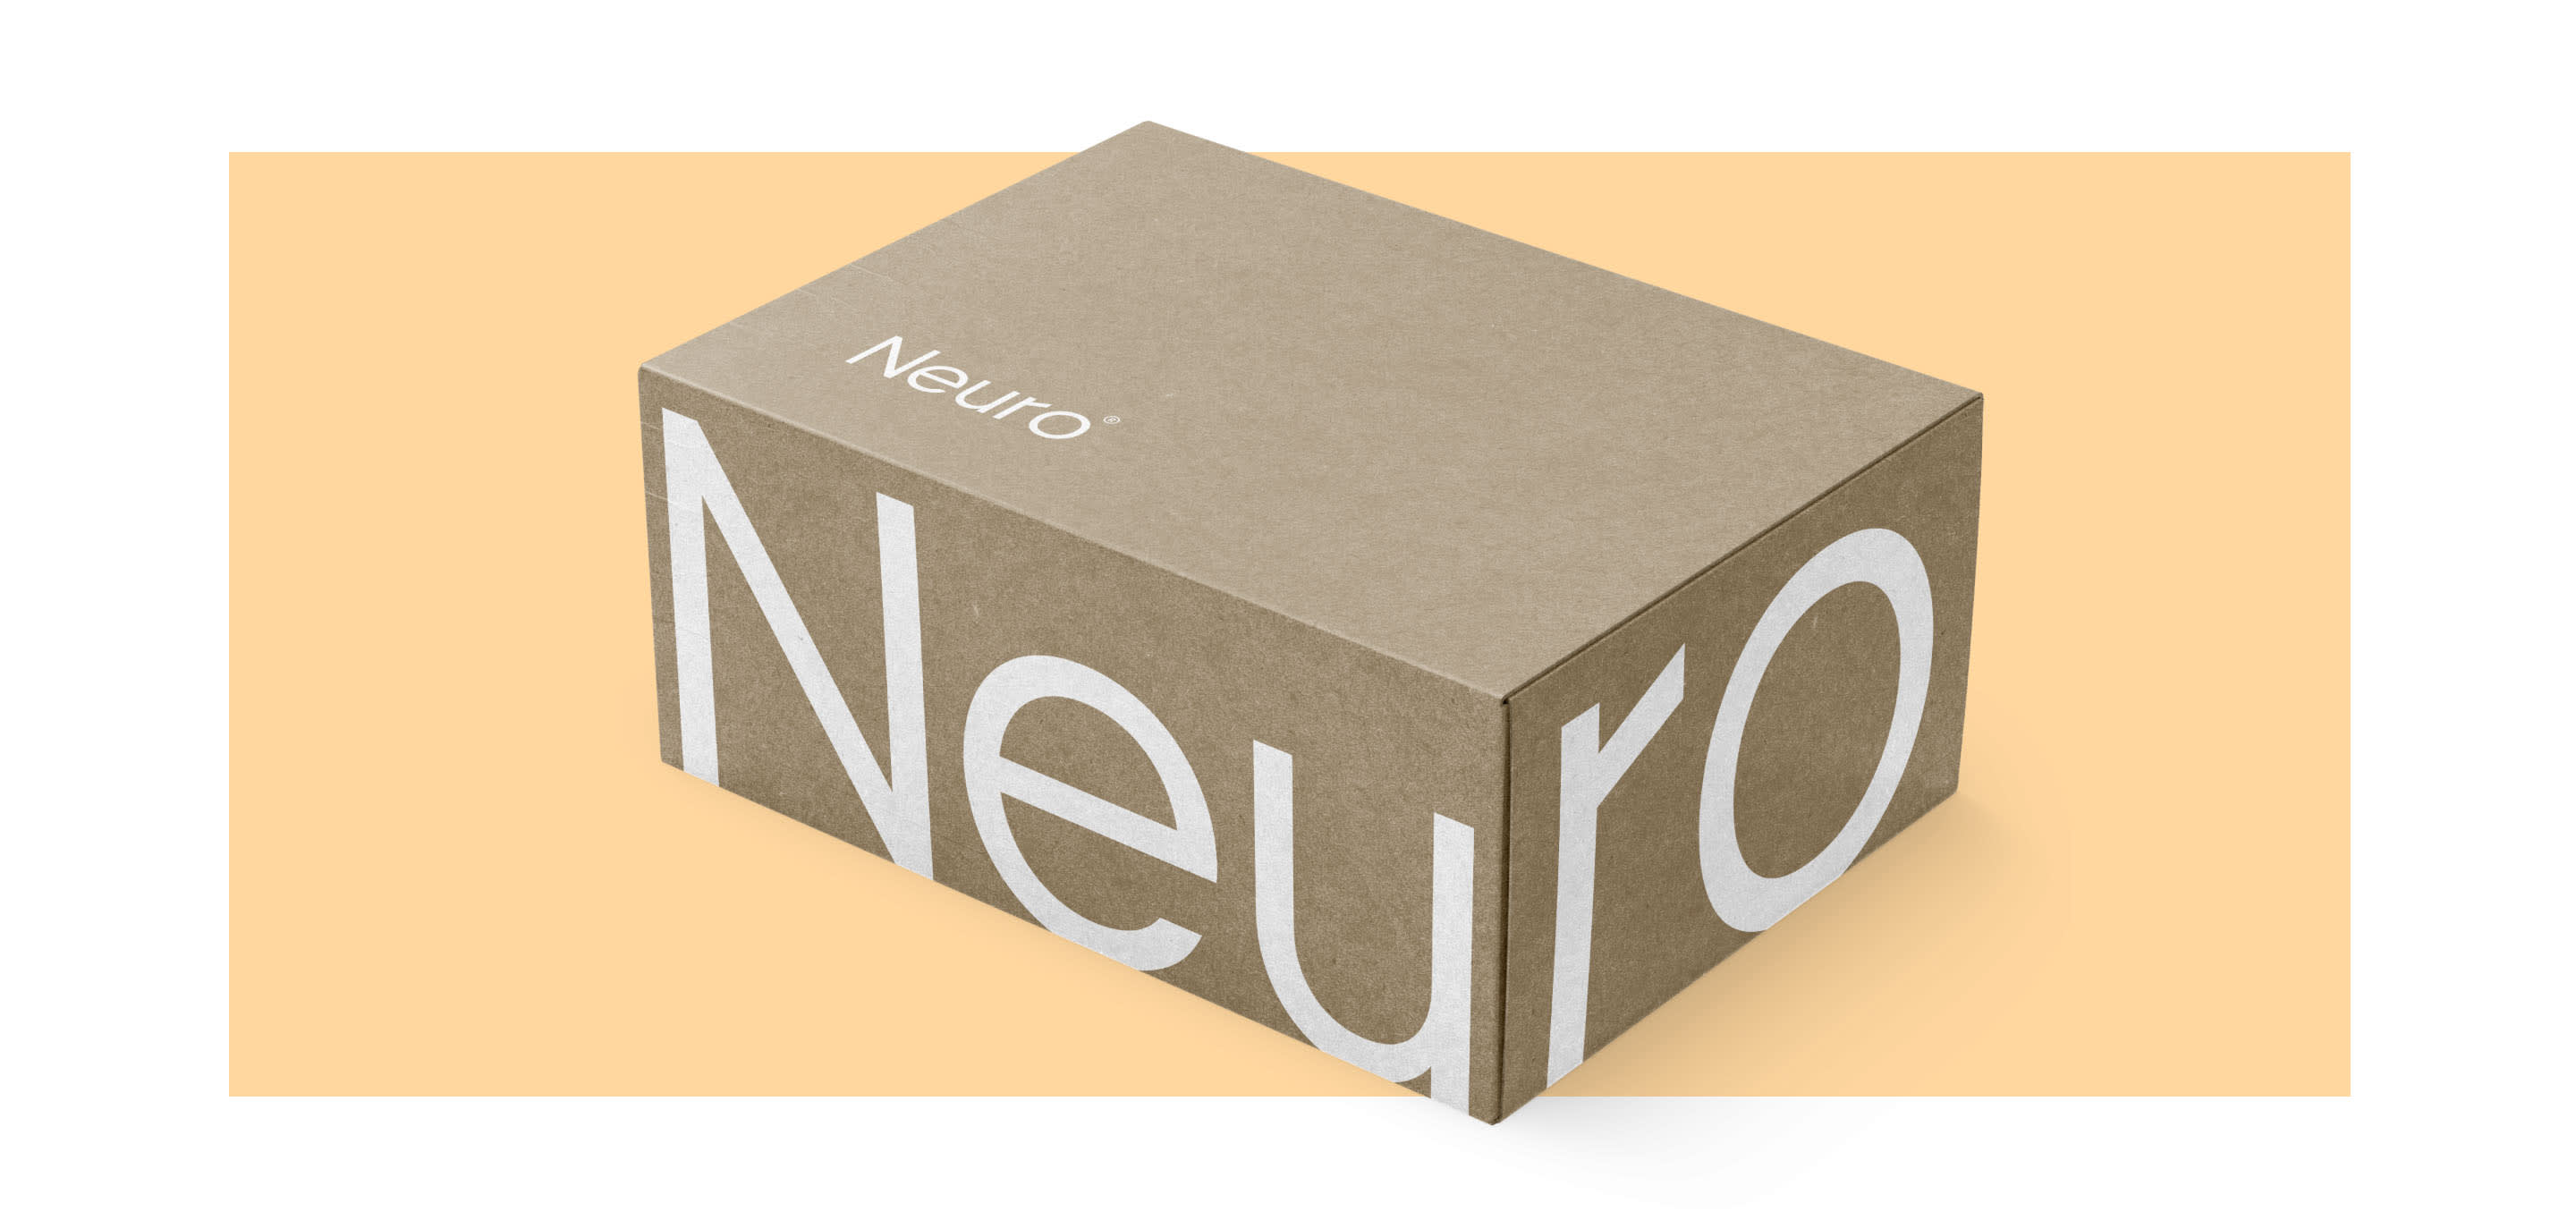 6 neuro desktop